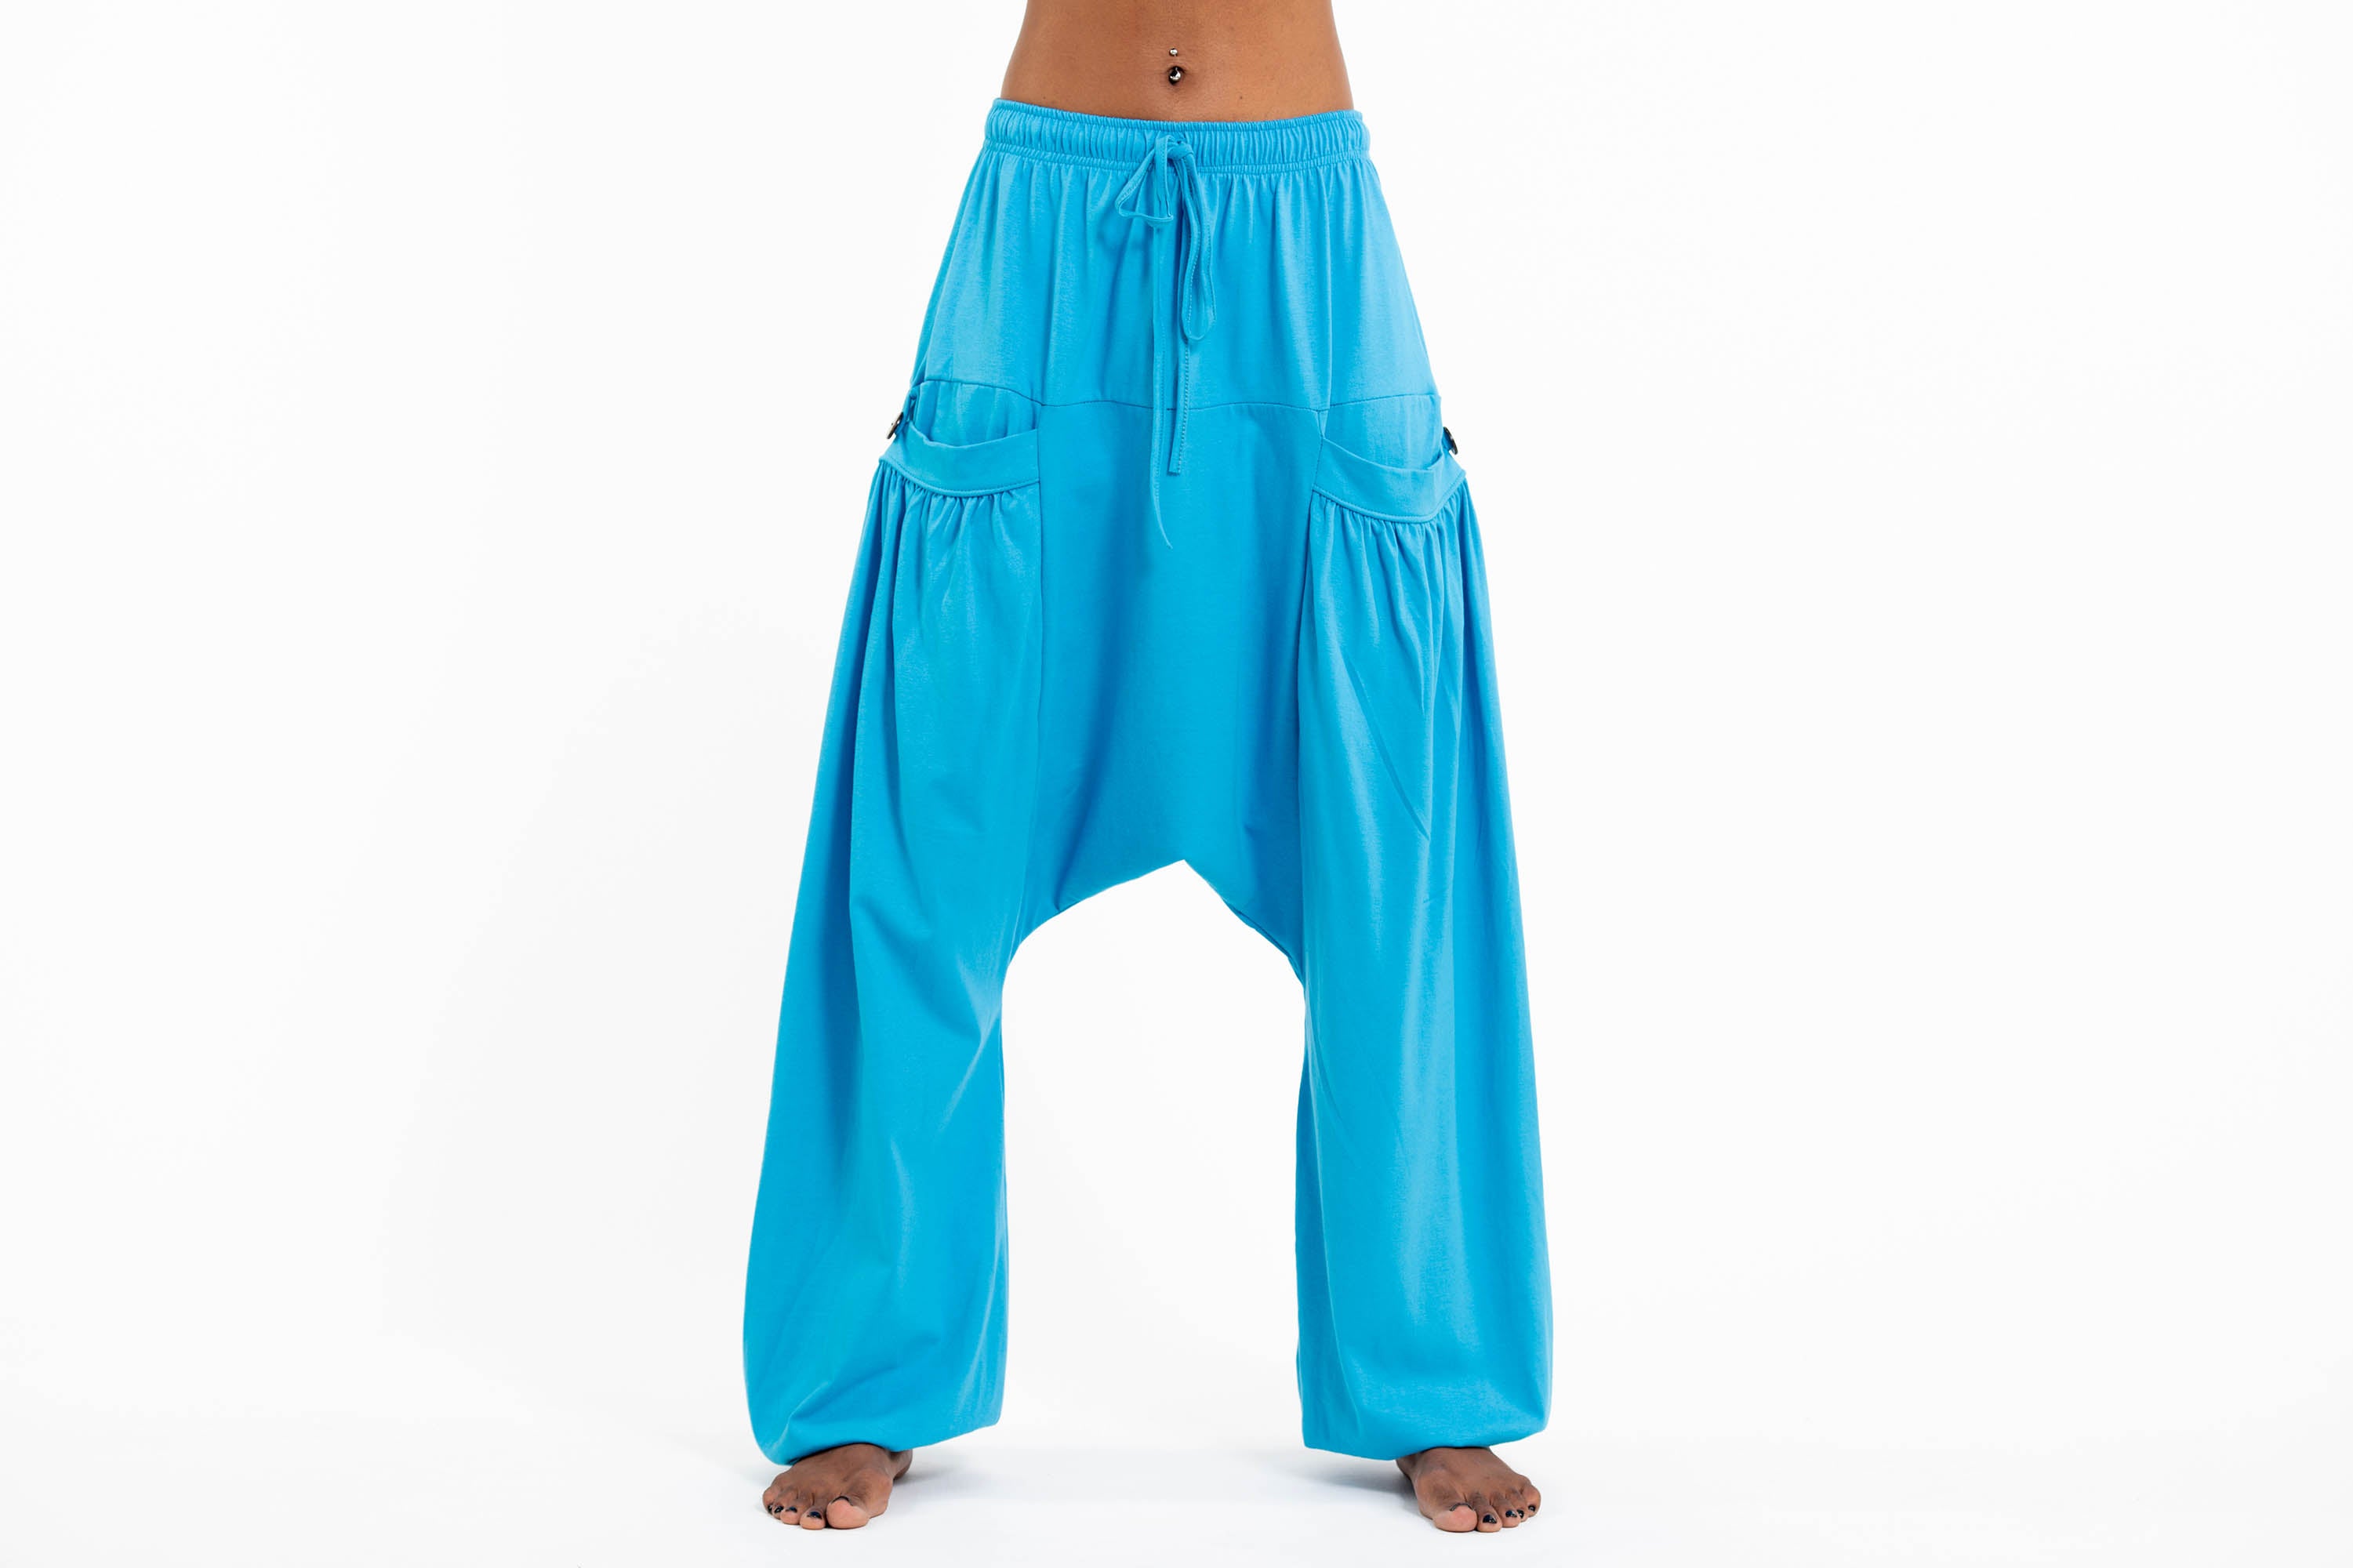 Women Pants Cotton in Blue Harem Solid Light